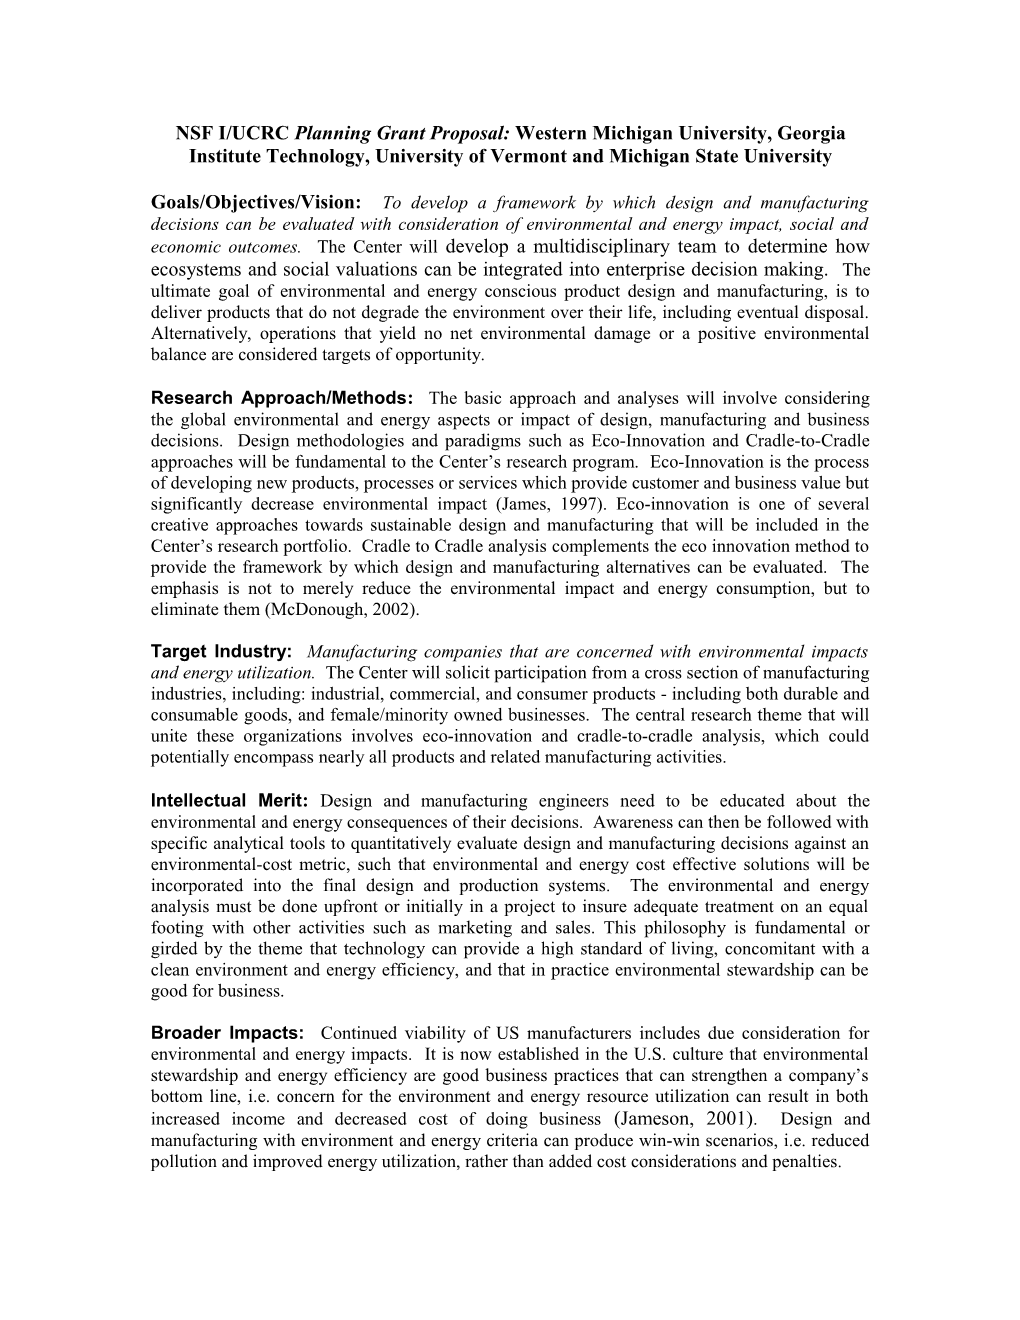 NSF I/UCRC Planning Grant Proposal: Western Michigan University, Georgia Institute Technology